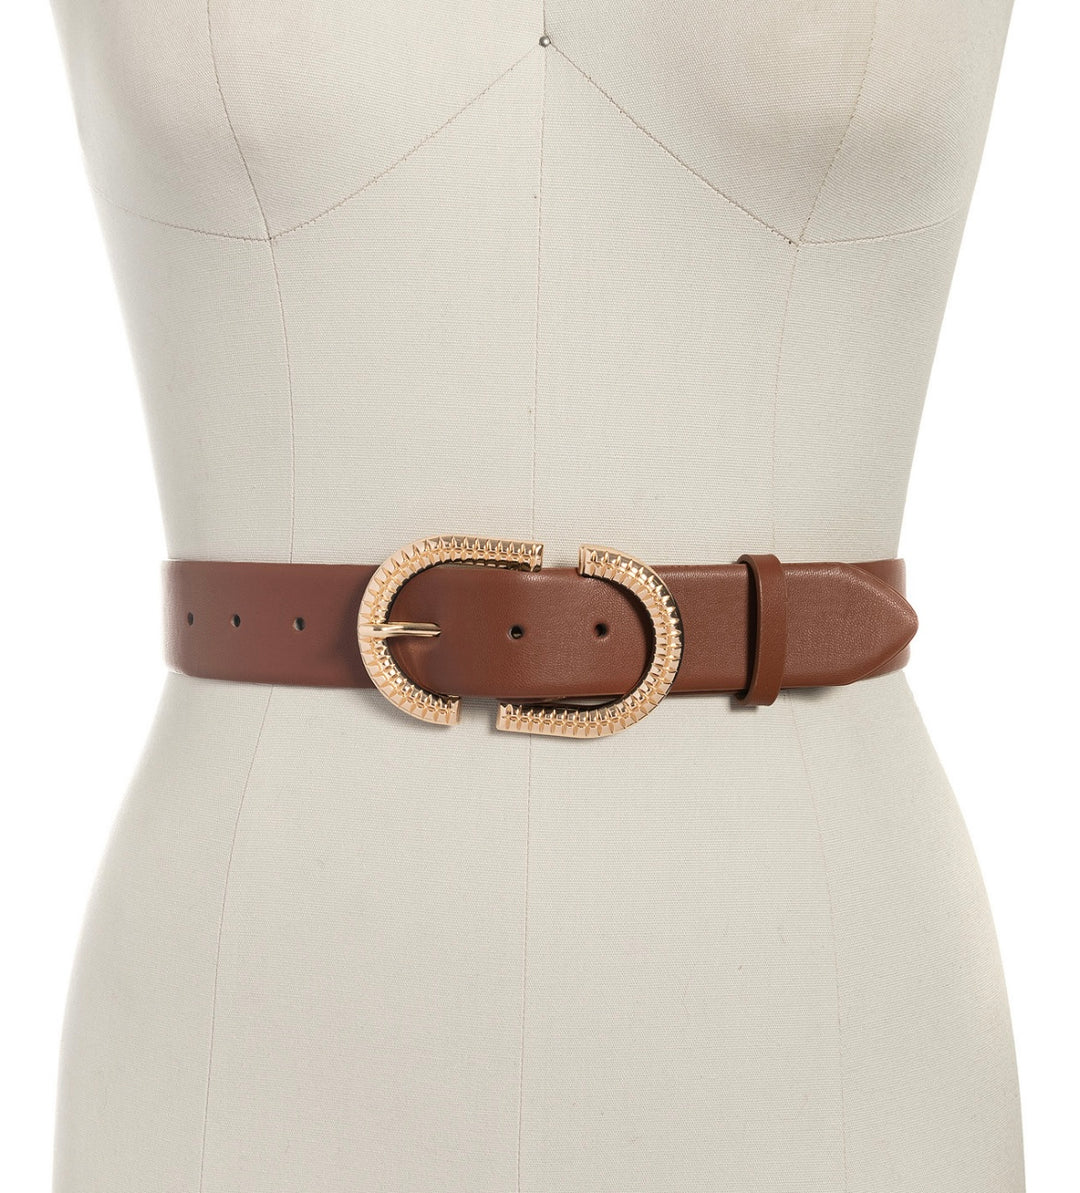 Inc International Concepts Women's Textured Buckle Belt Sizes S, M, L